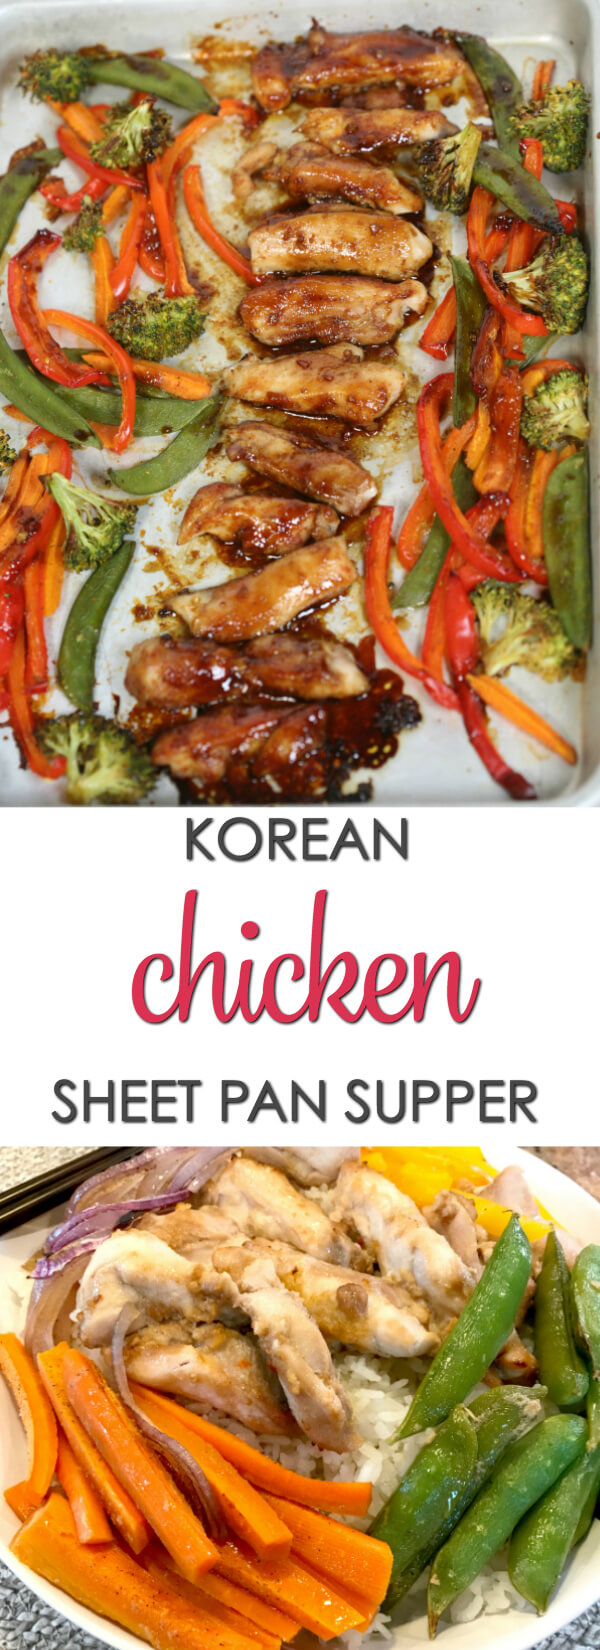 korean chicken and sheet pan chicken dish.